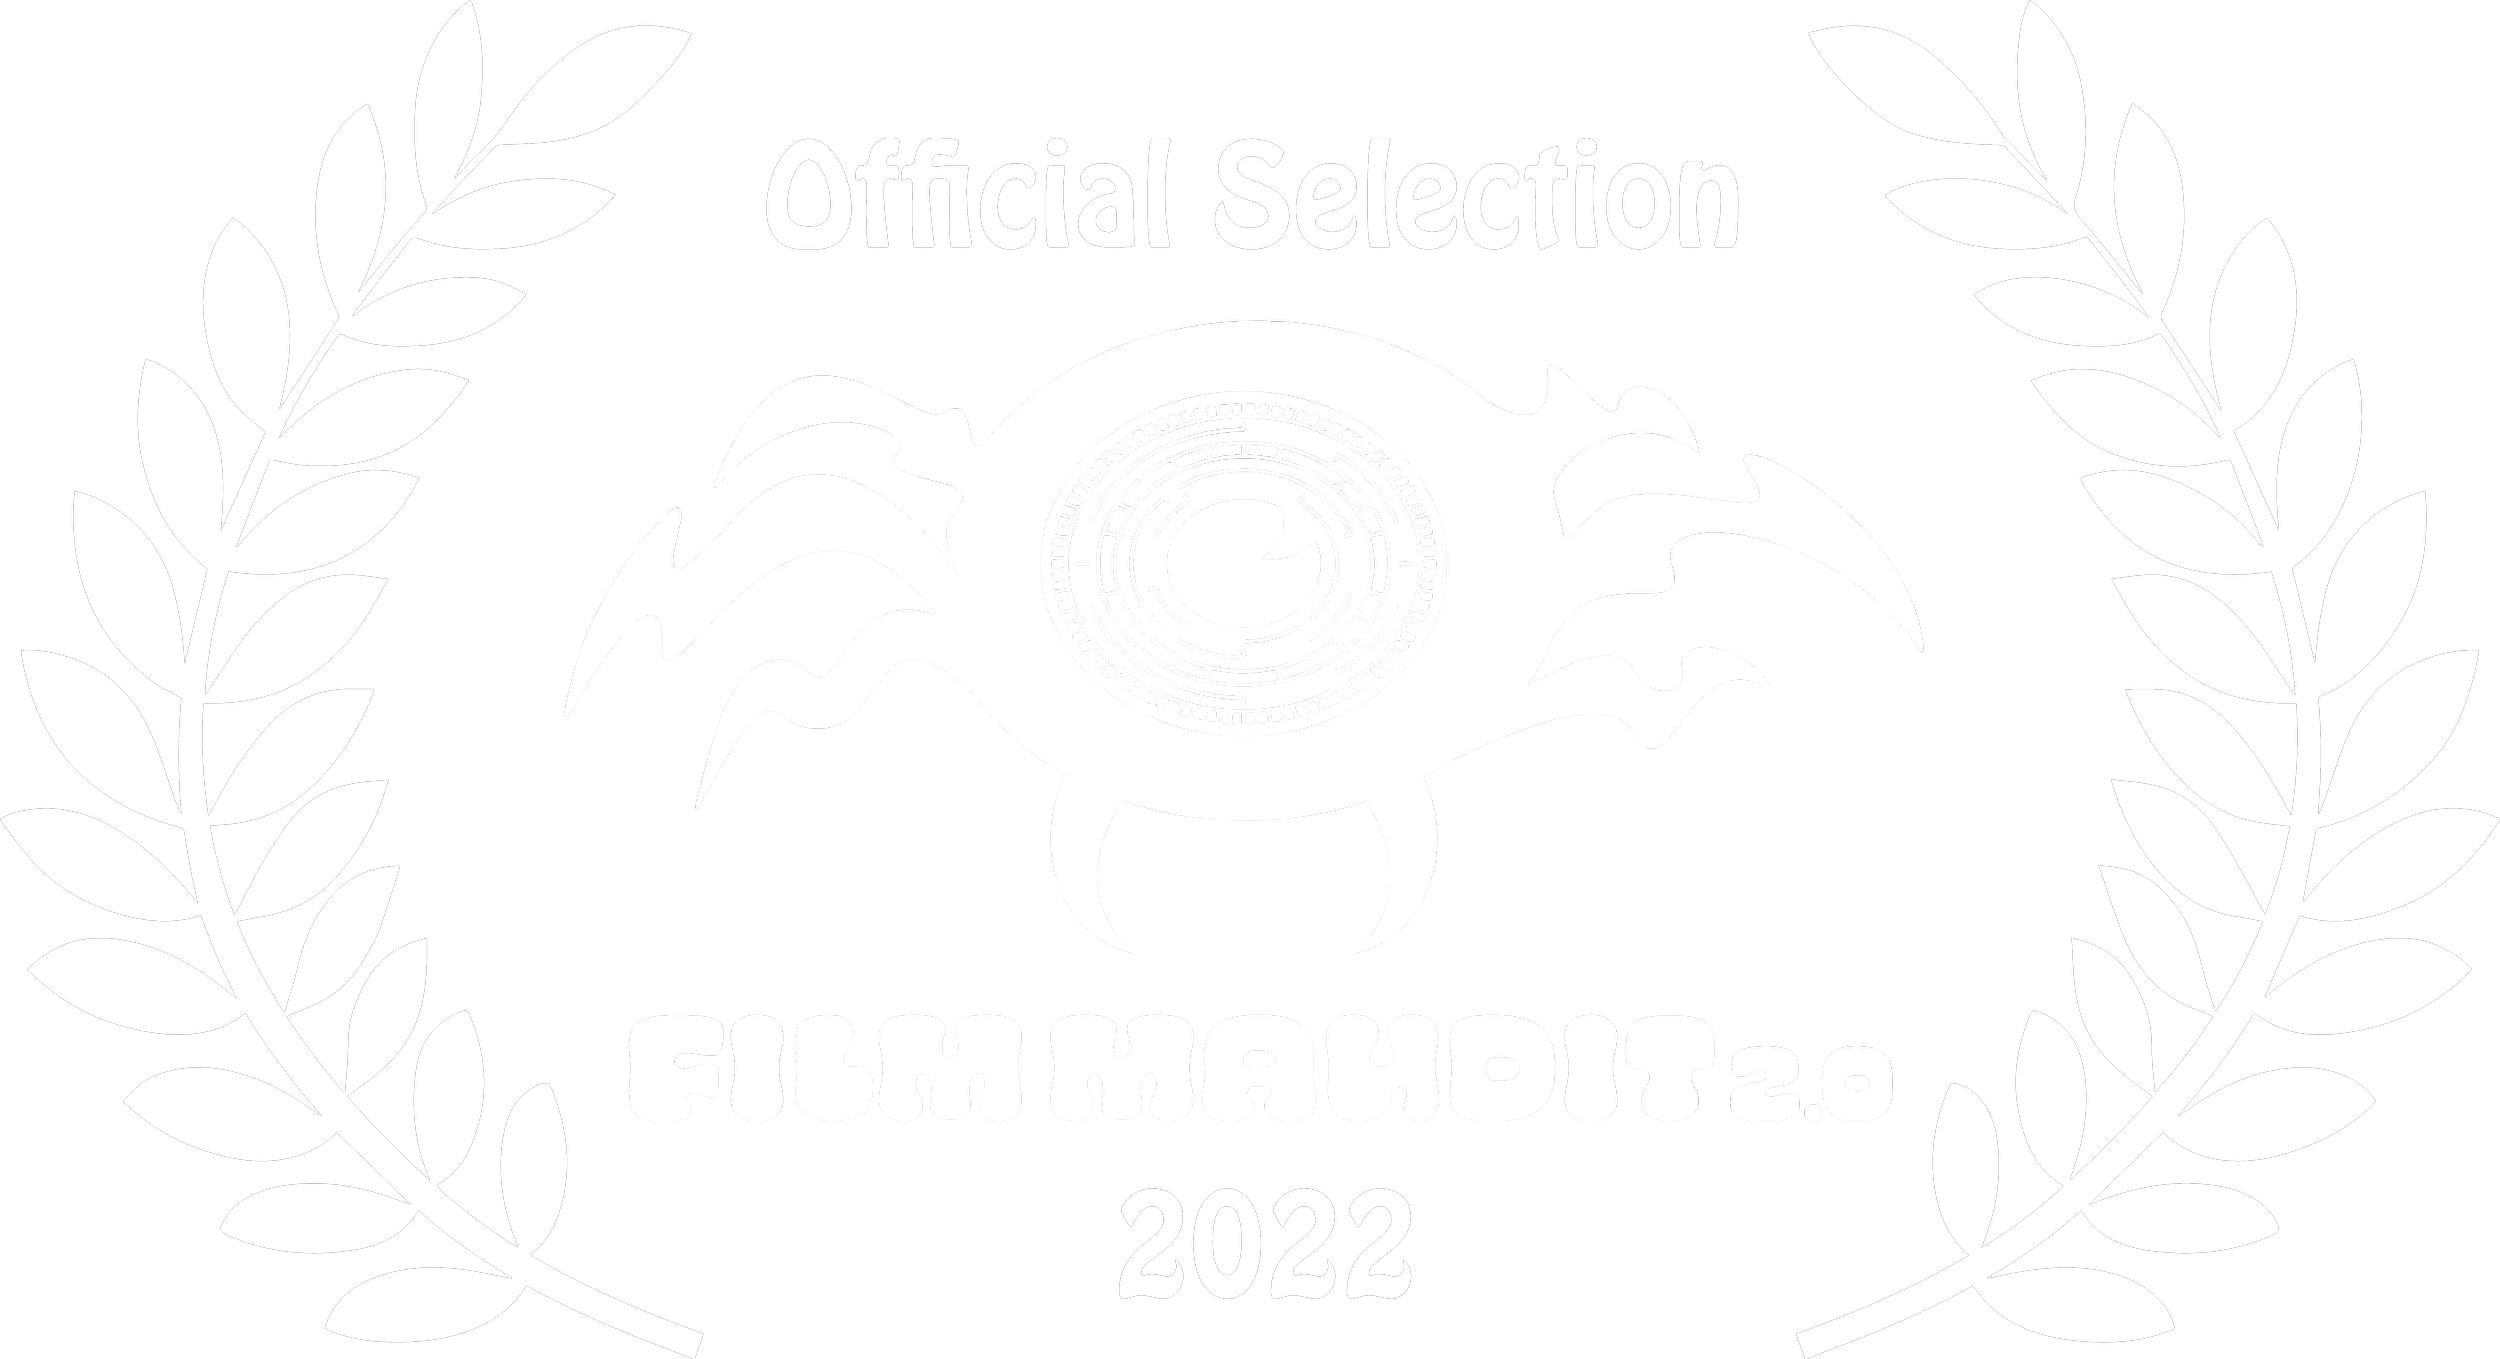 FilmMauditLaurel_OfficialSelection_2022_White.png